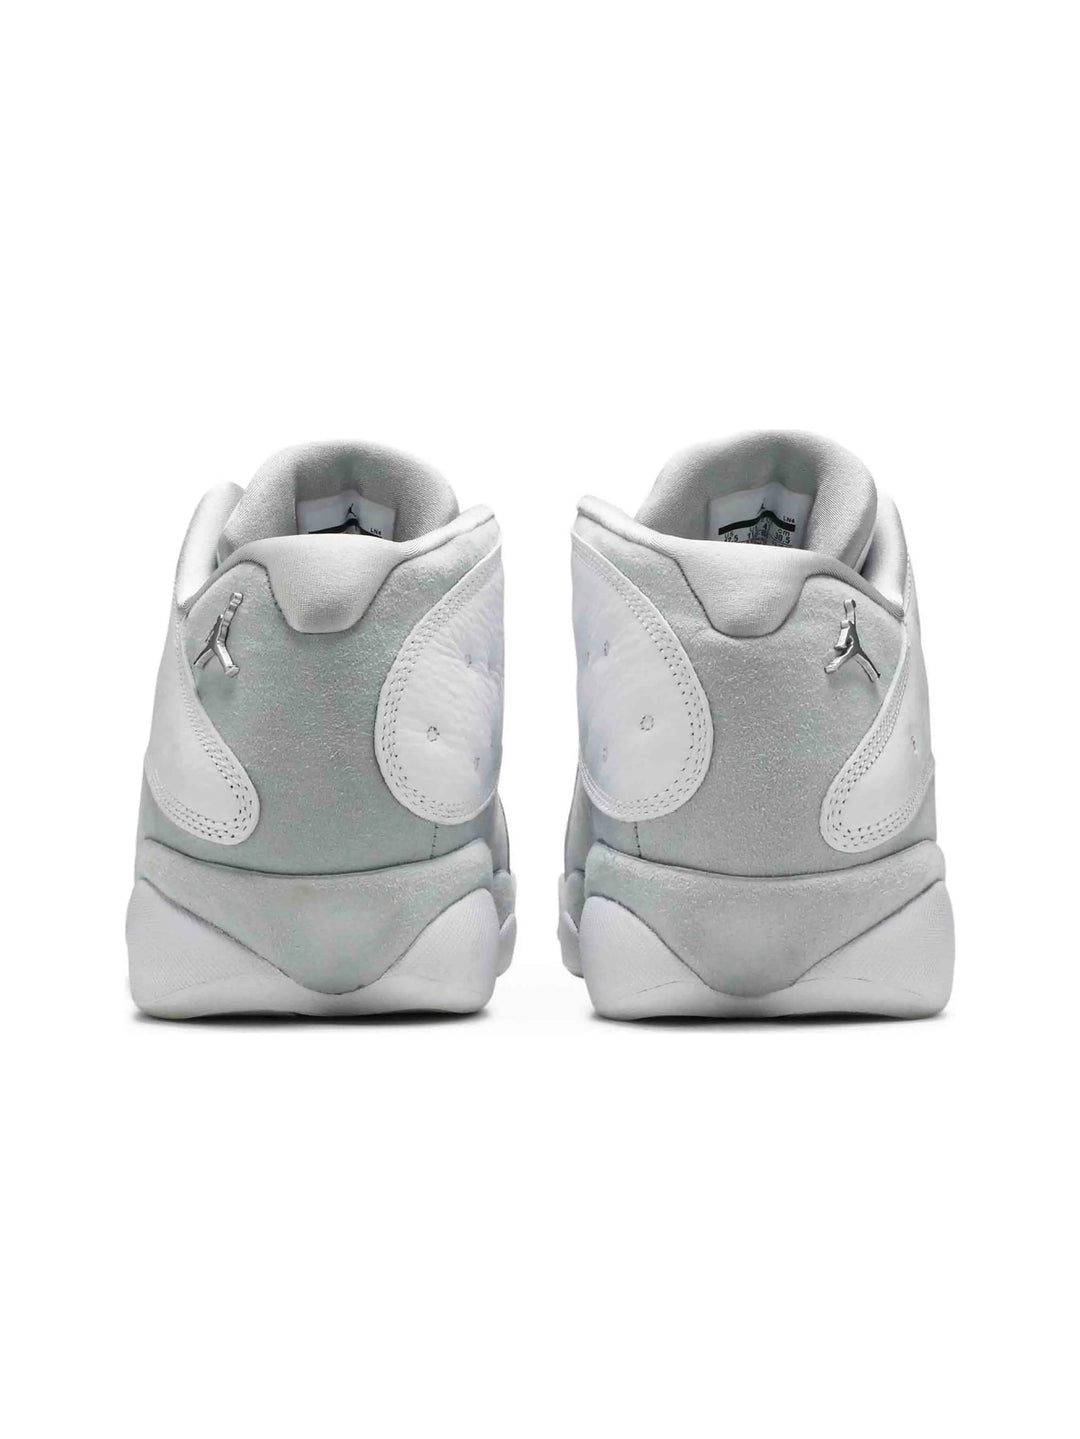 Nike Air Jordan 13 Retro Low Pure Platinum Prior